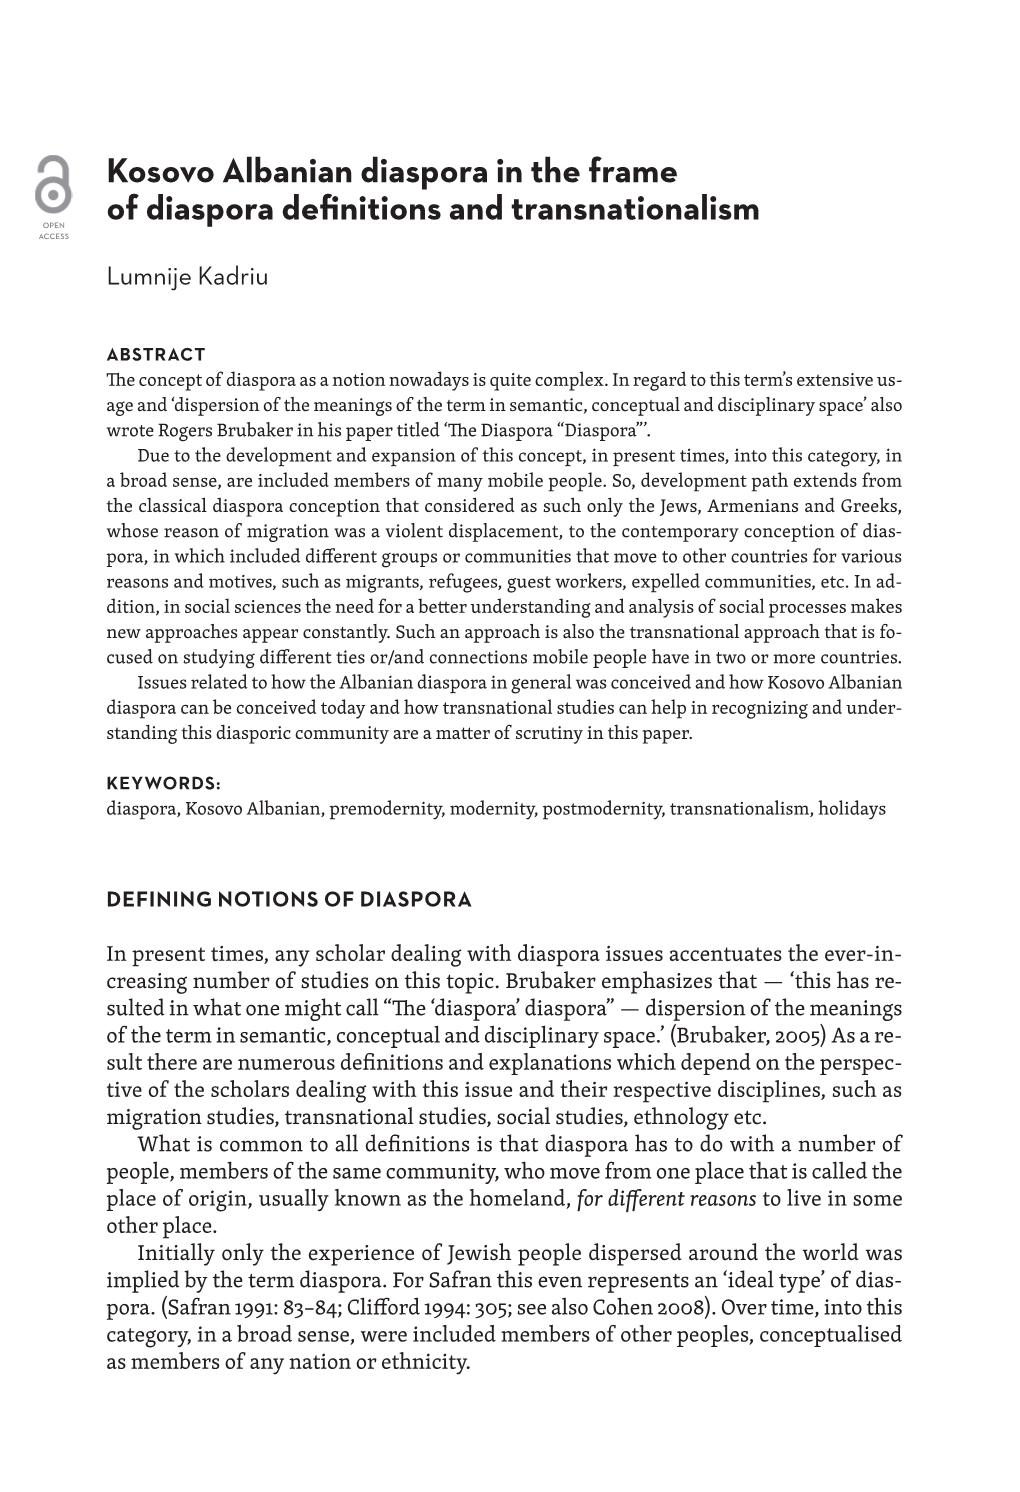 Kosovo Albanian Diaspora in the Frame of Diaspora Definitions and Transnationalism OPEN ACCESS Lumnije Kadriu